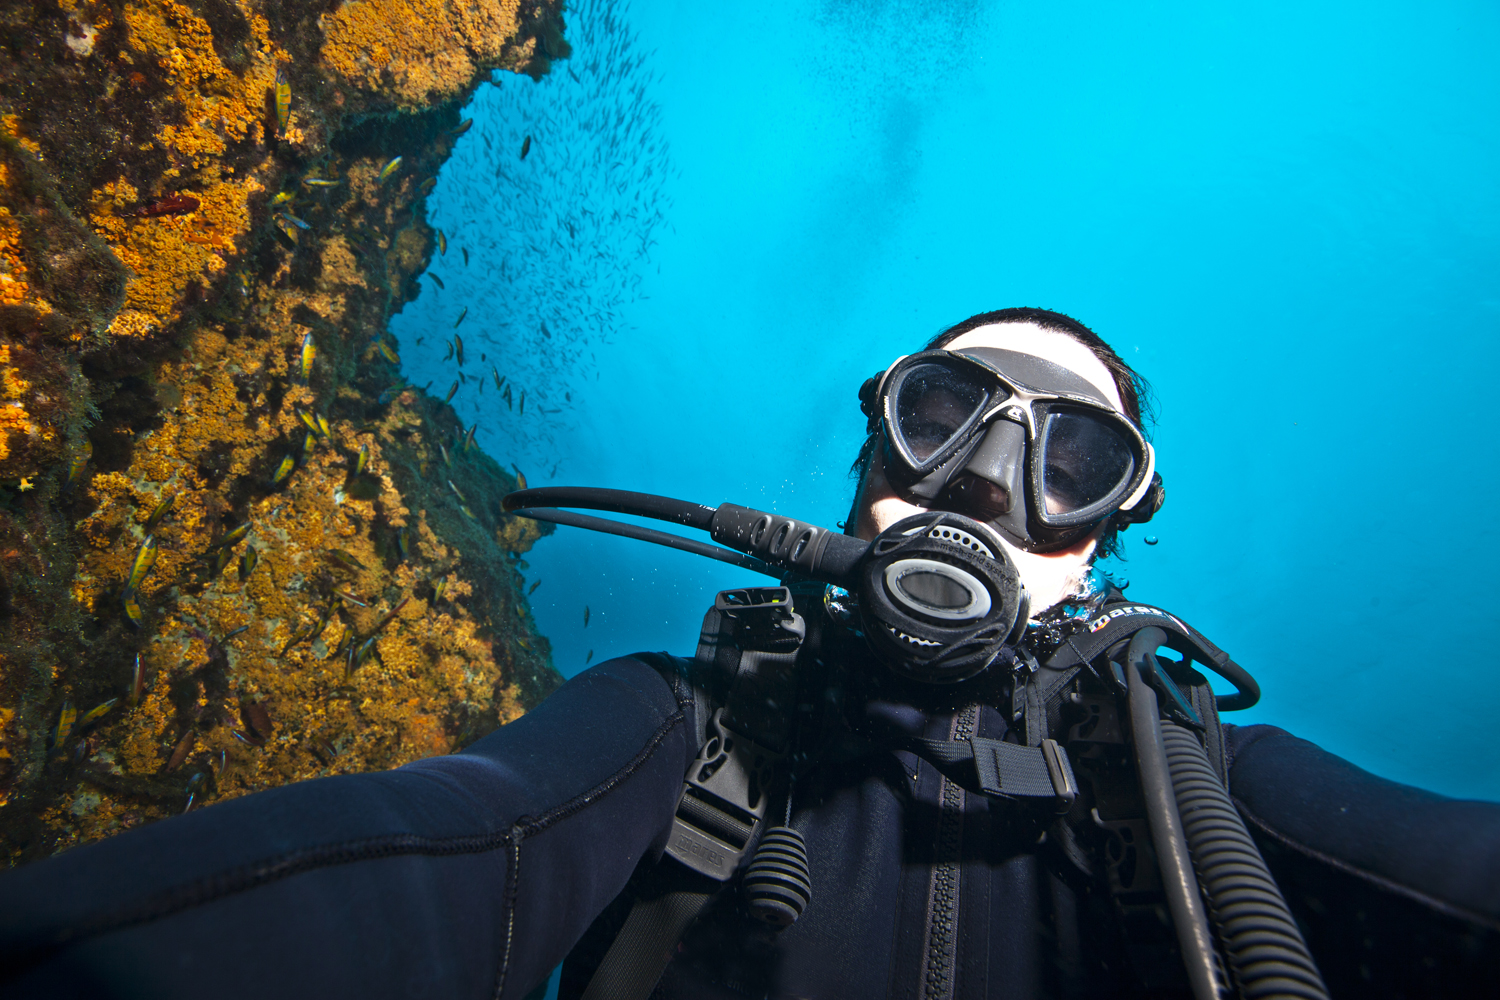 The underwater photography exhibition organiser